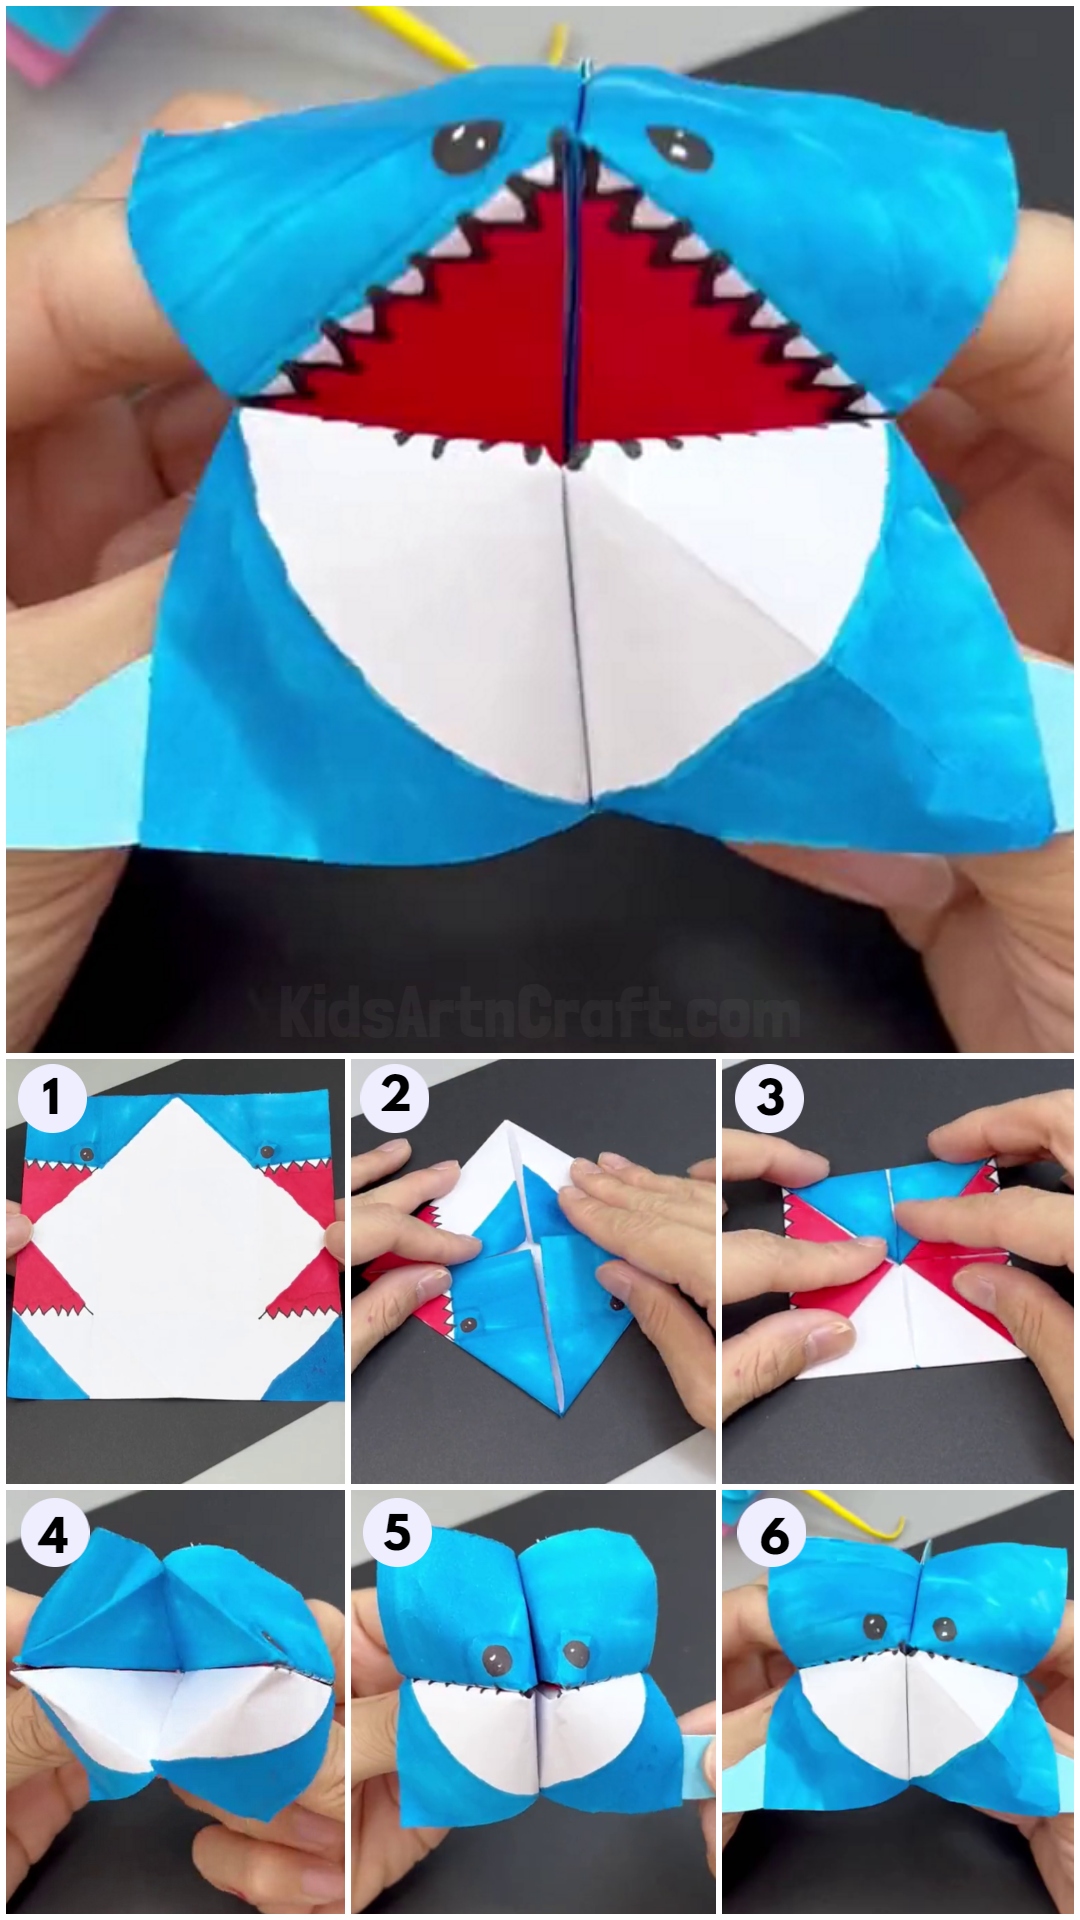 DIY Easy Origami Paper Shark Toy Tutorial For Kids - Kids Art & Craft